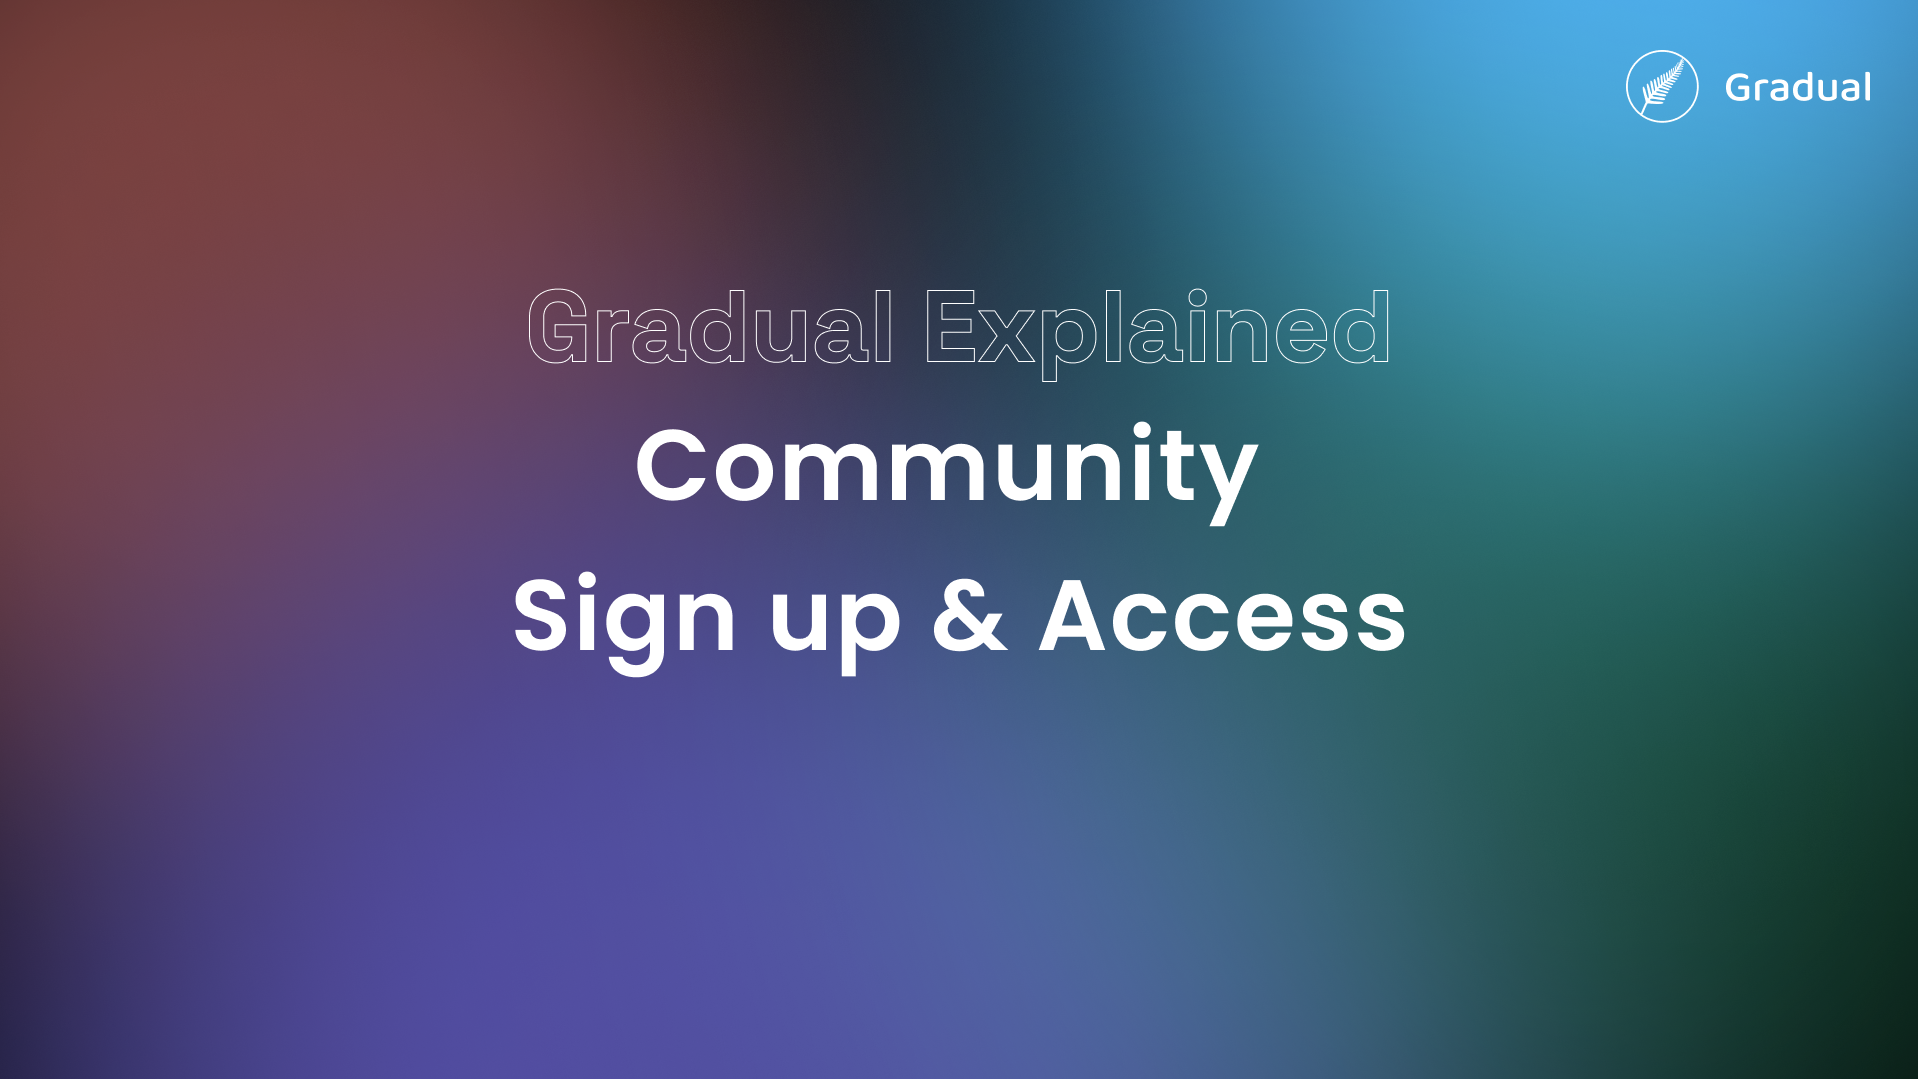 Gradual Explained: Community Sign up & Access